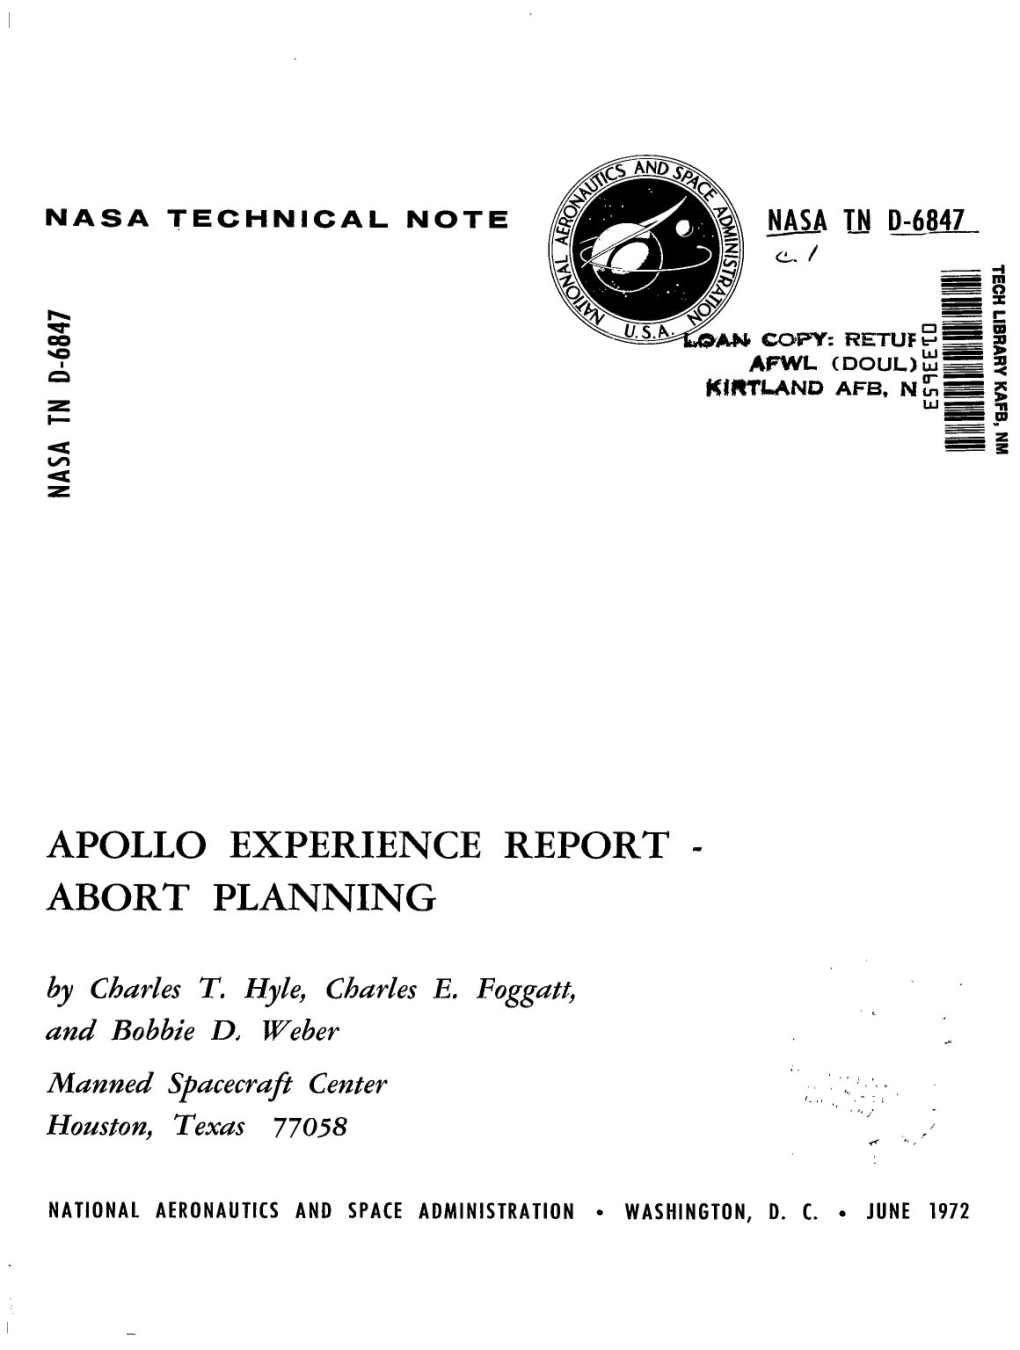 Apollo Experience Report Abort Planning